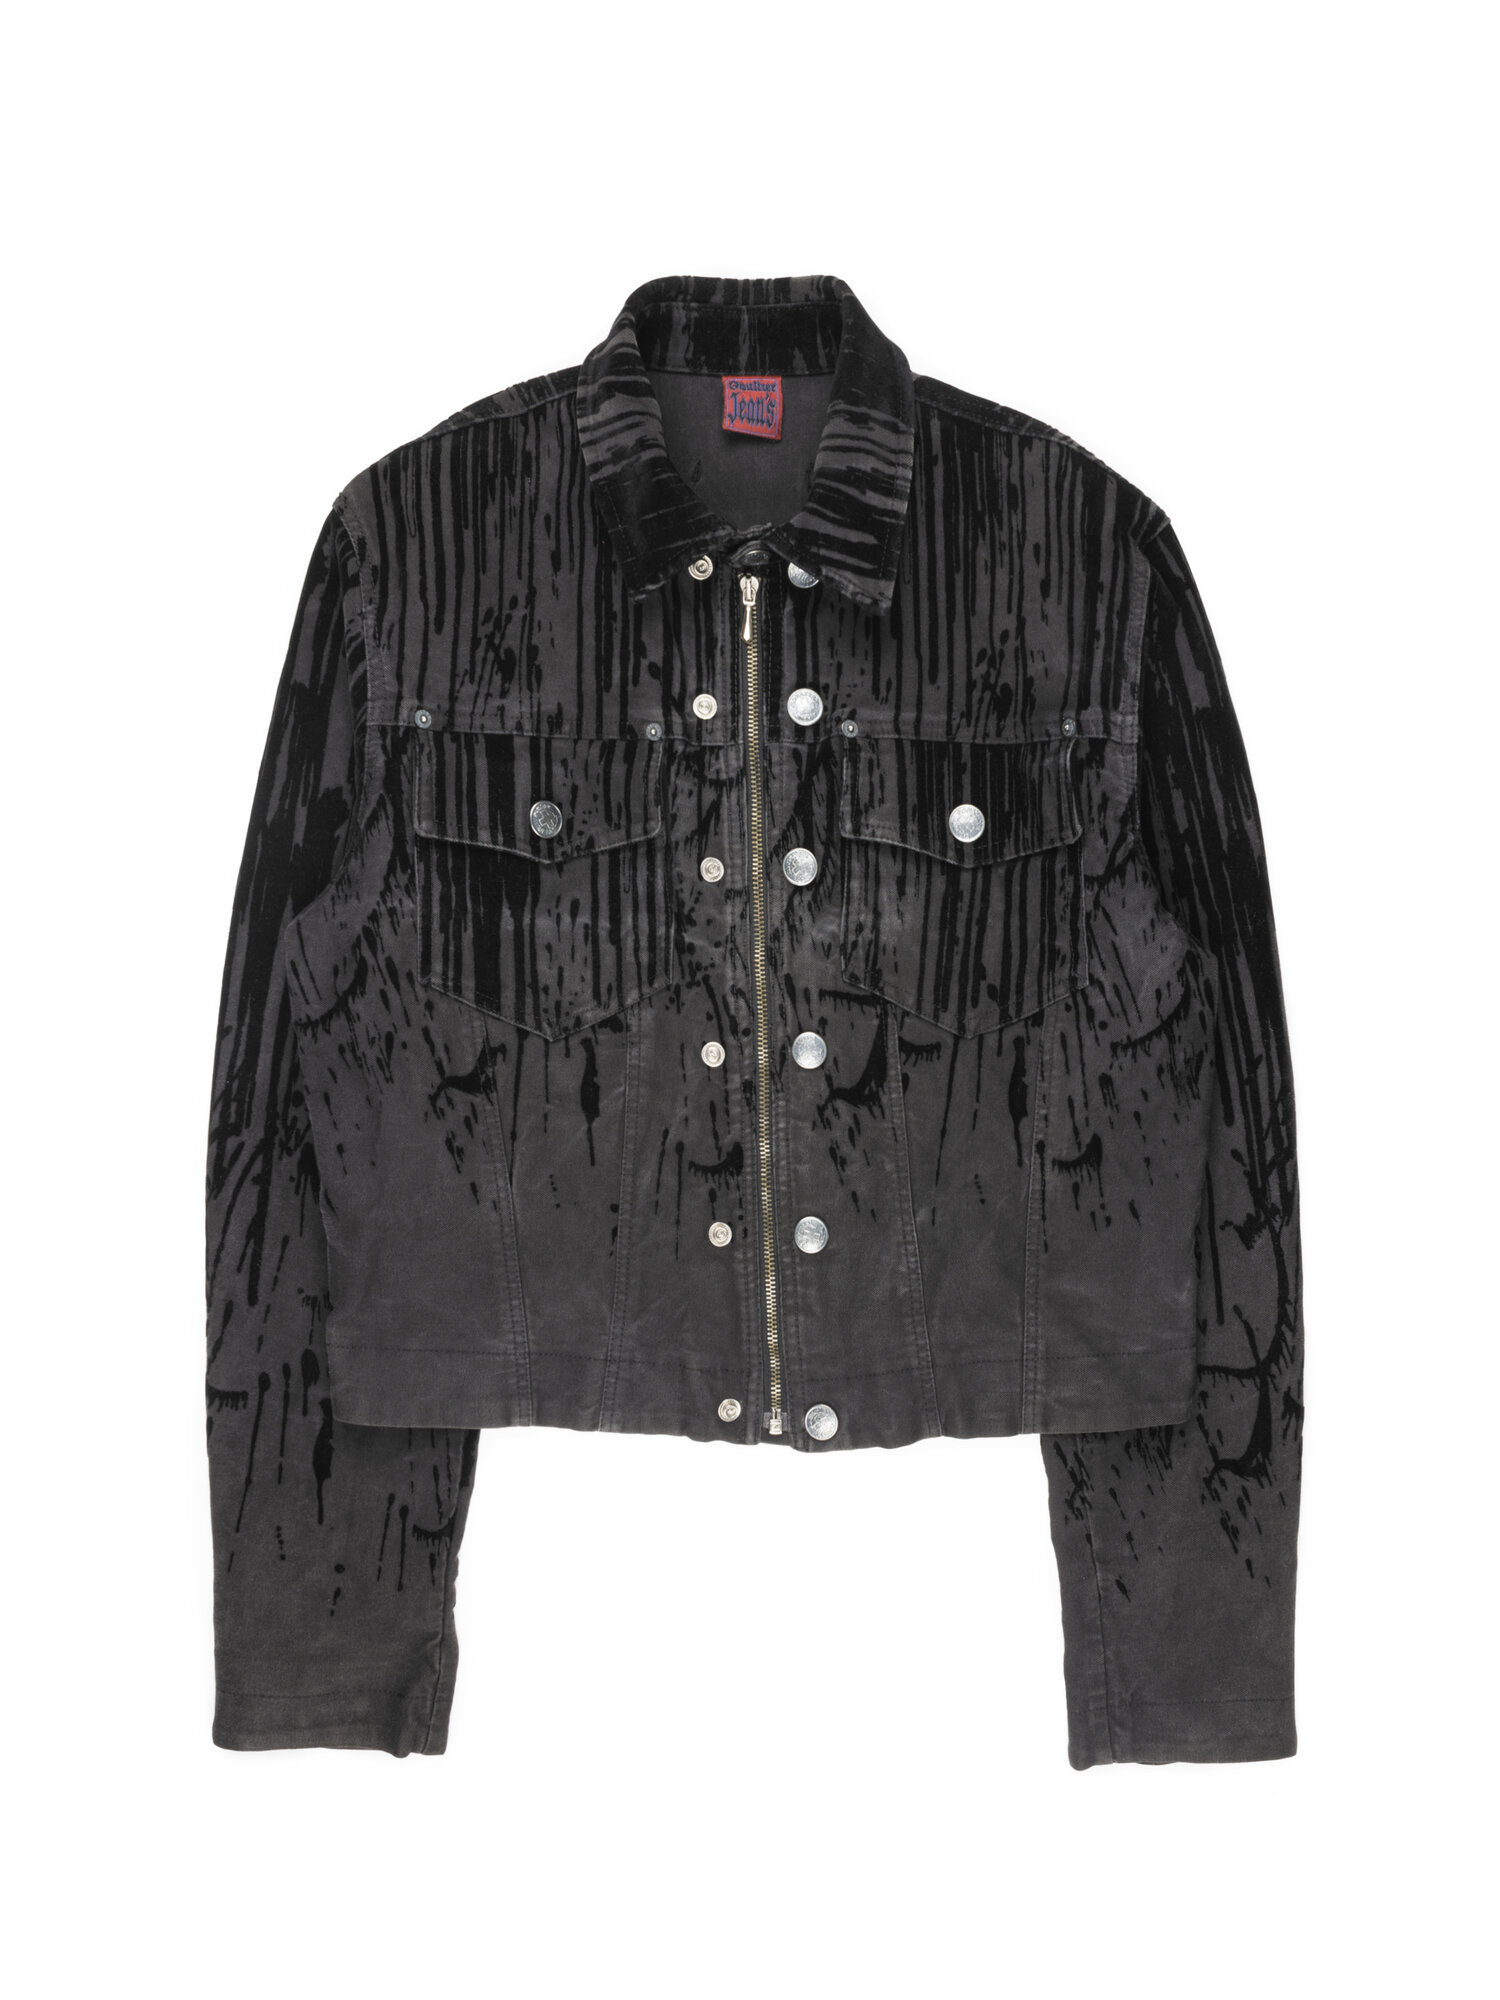 Jean Paul Gaultier AW1998 Velvet Trucker Jacket — Middleman Store